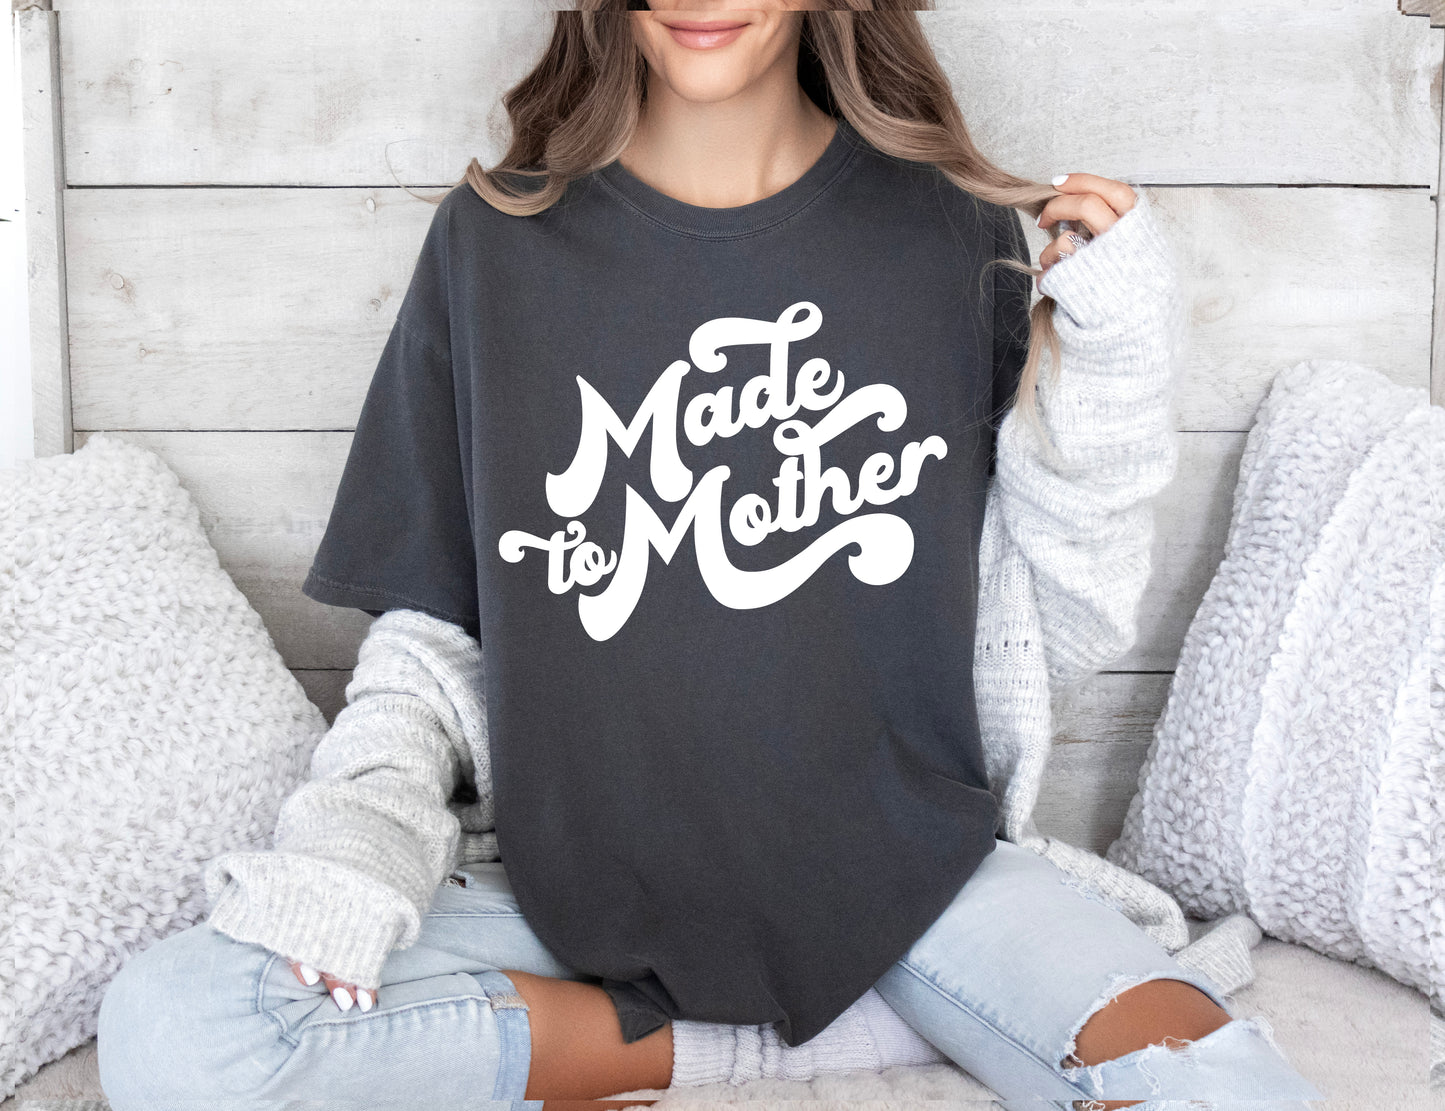 Made To Mother Shirt, Comfort Colors Shirt, Mother's Day T-Shirt-newamarketing